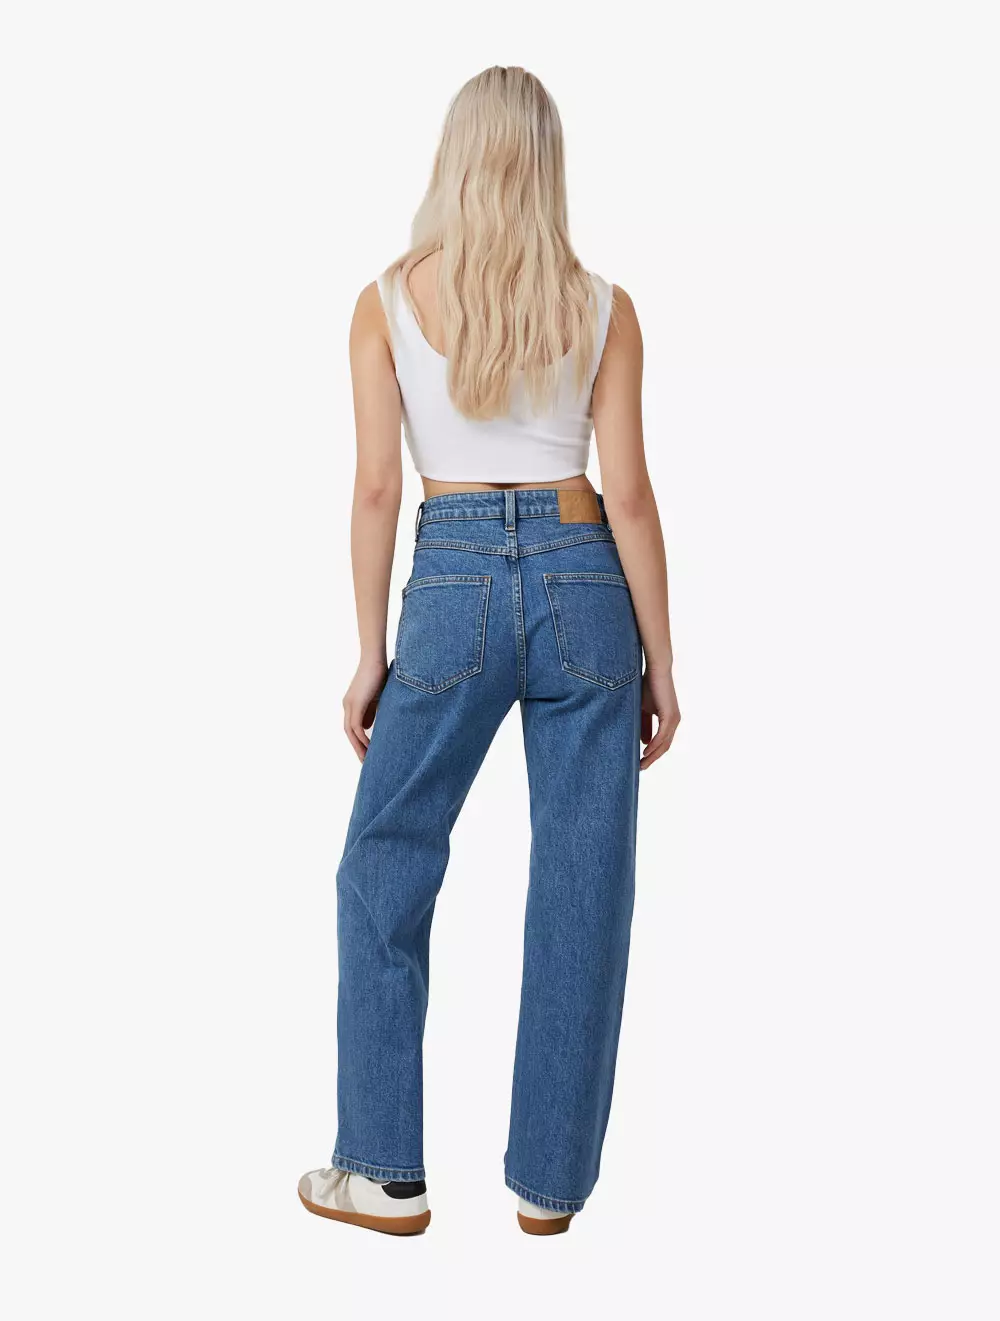 Cotton On - Pakaian Wanita - Slim Straight Jean Asia Fit - Sea Blue